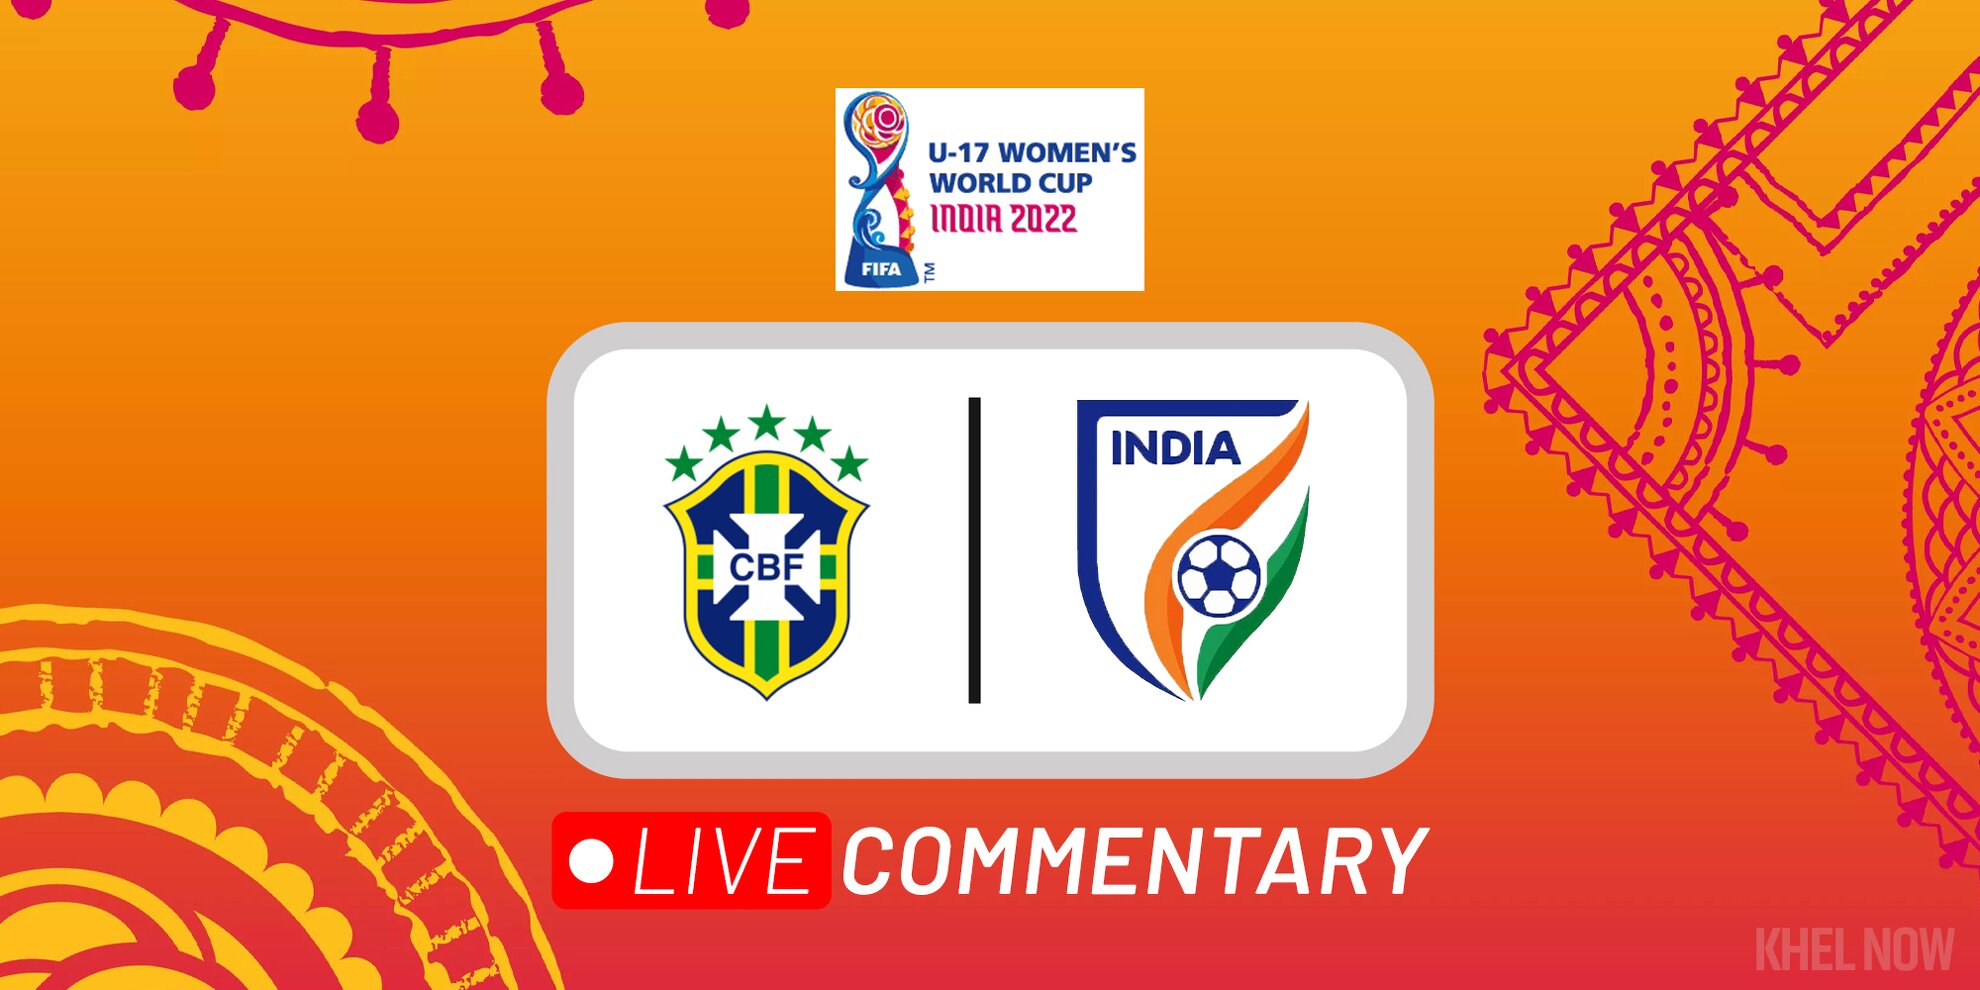 Brazil vs India FIFA U-17 Women's World Cup 2022